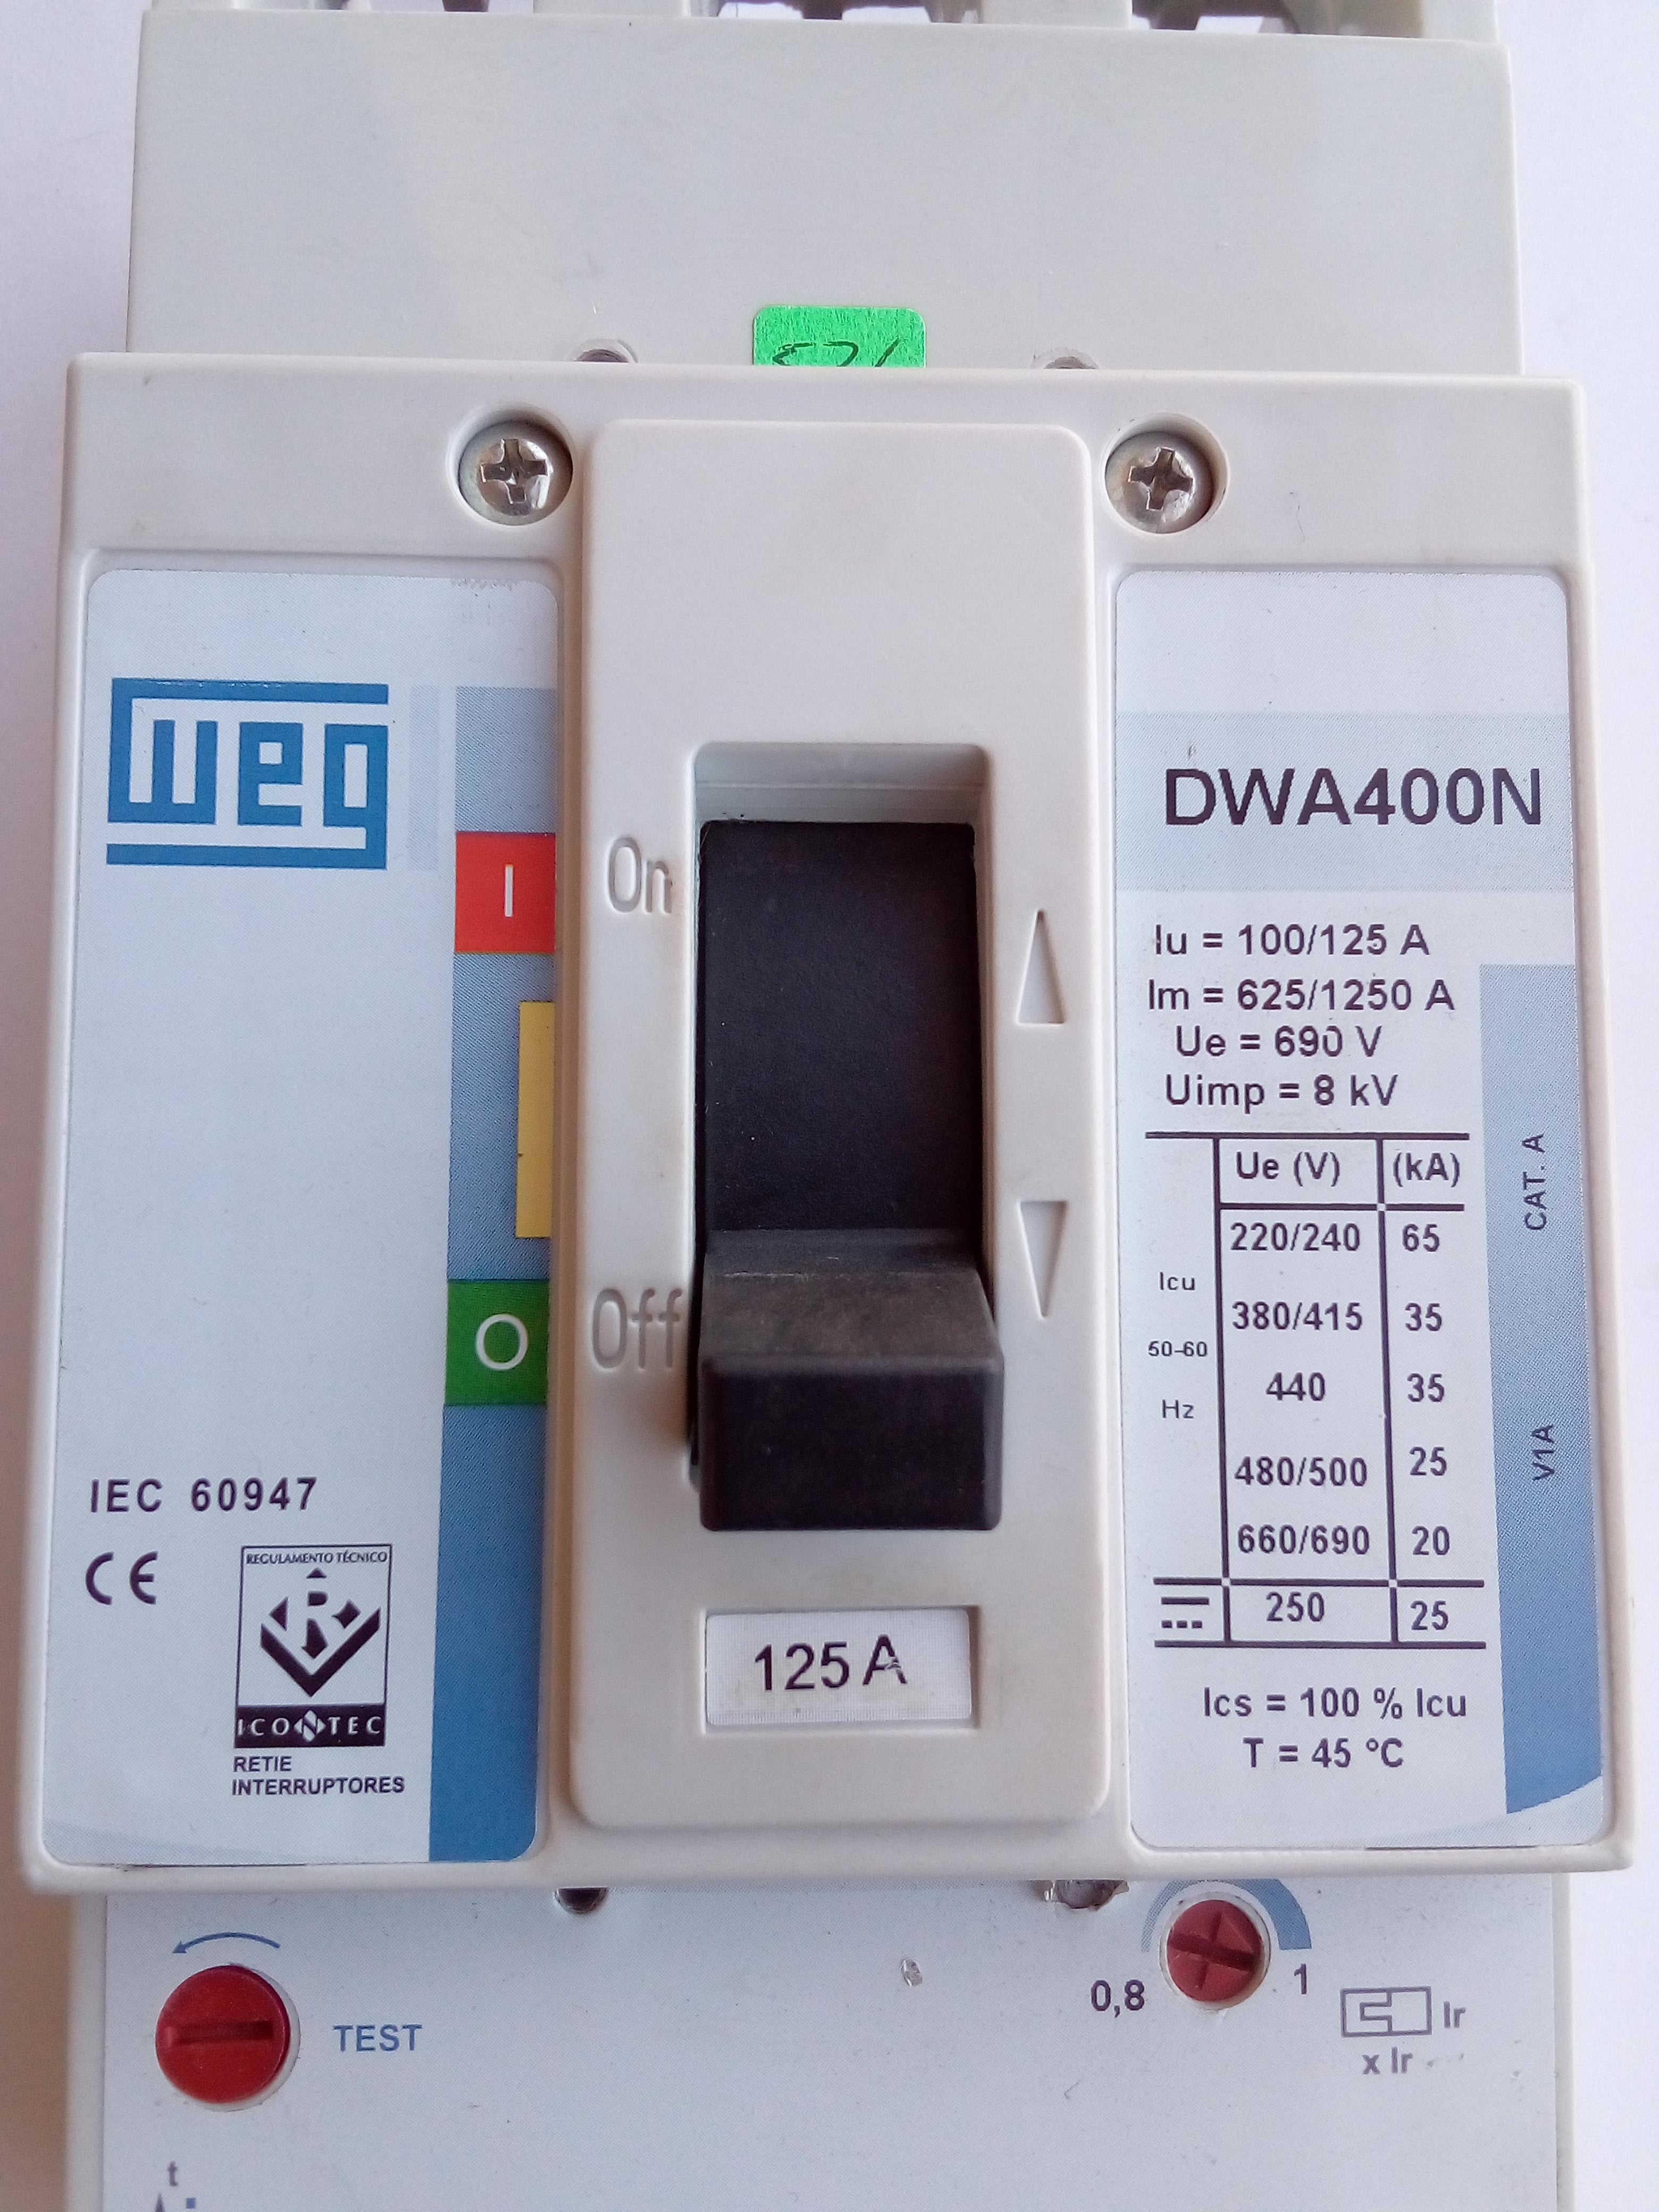 Interruptor WEG DWA400N